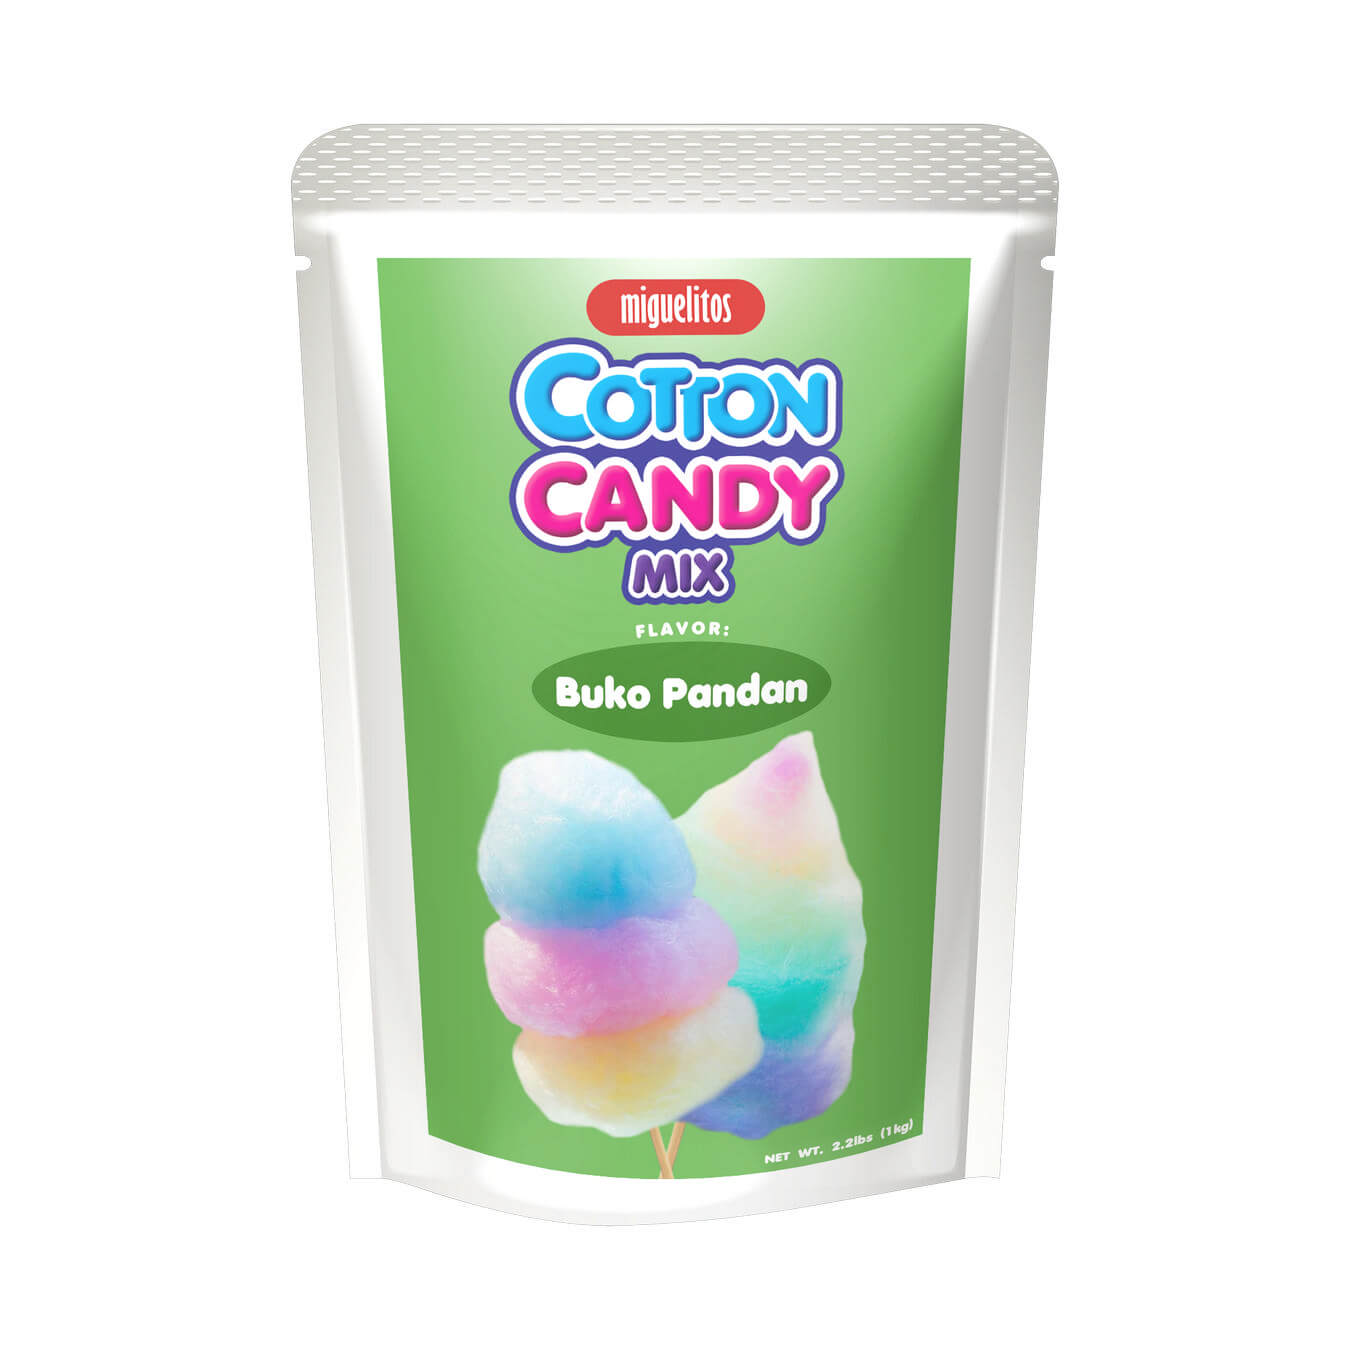 Cotton Candy Mix Buko Pandan